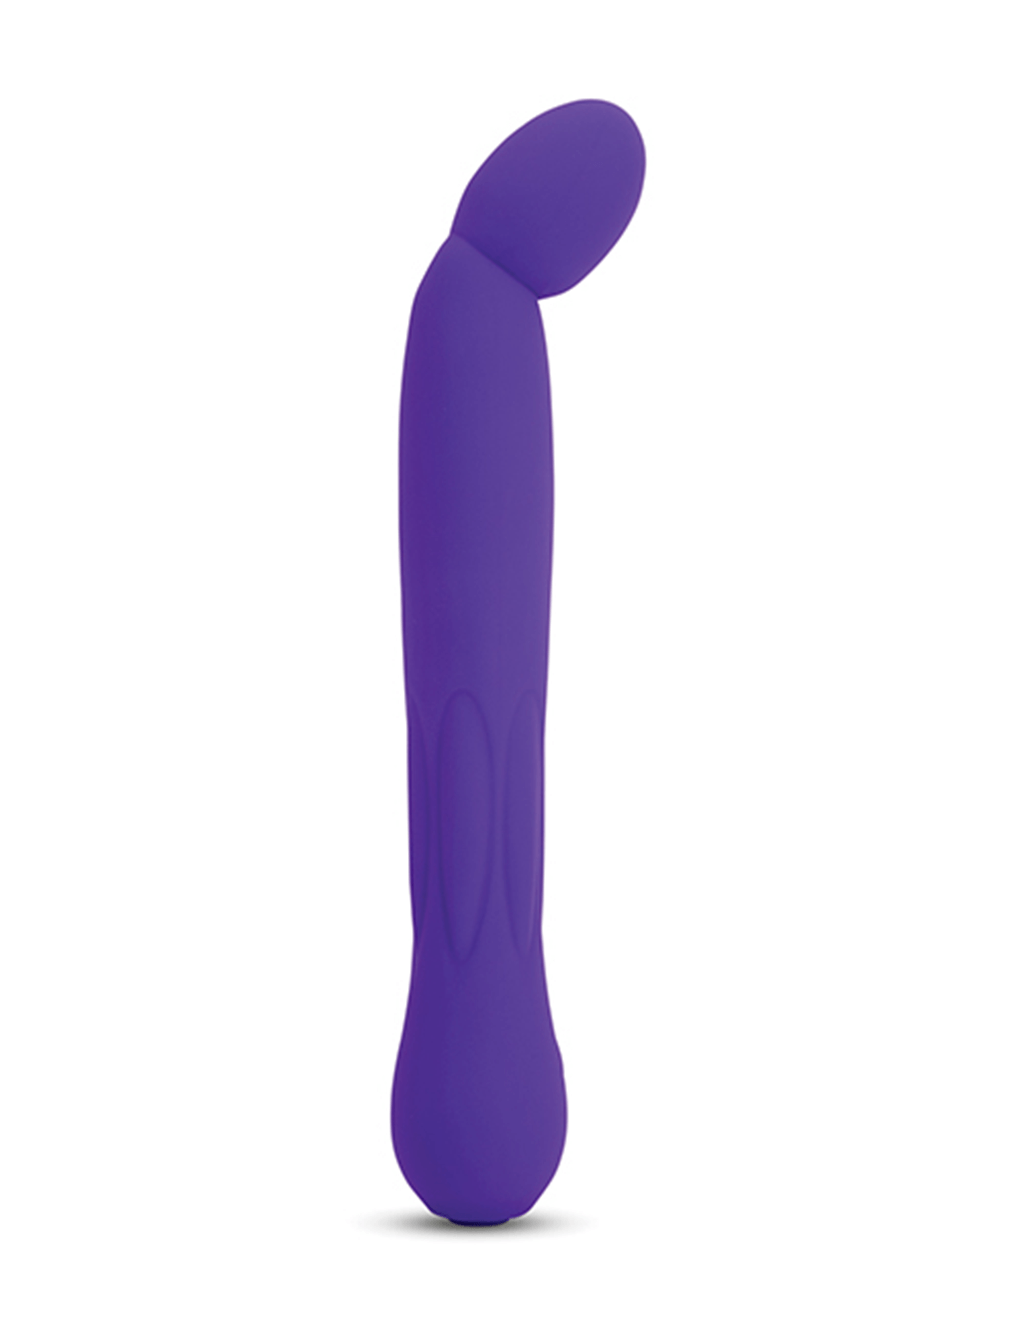 Sensuelle Ace Pro Purple